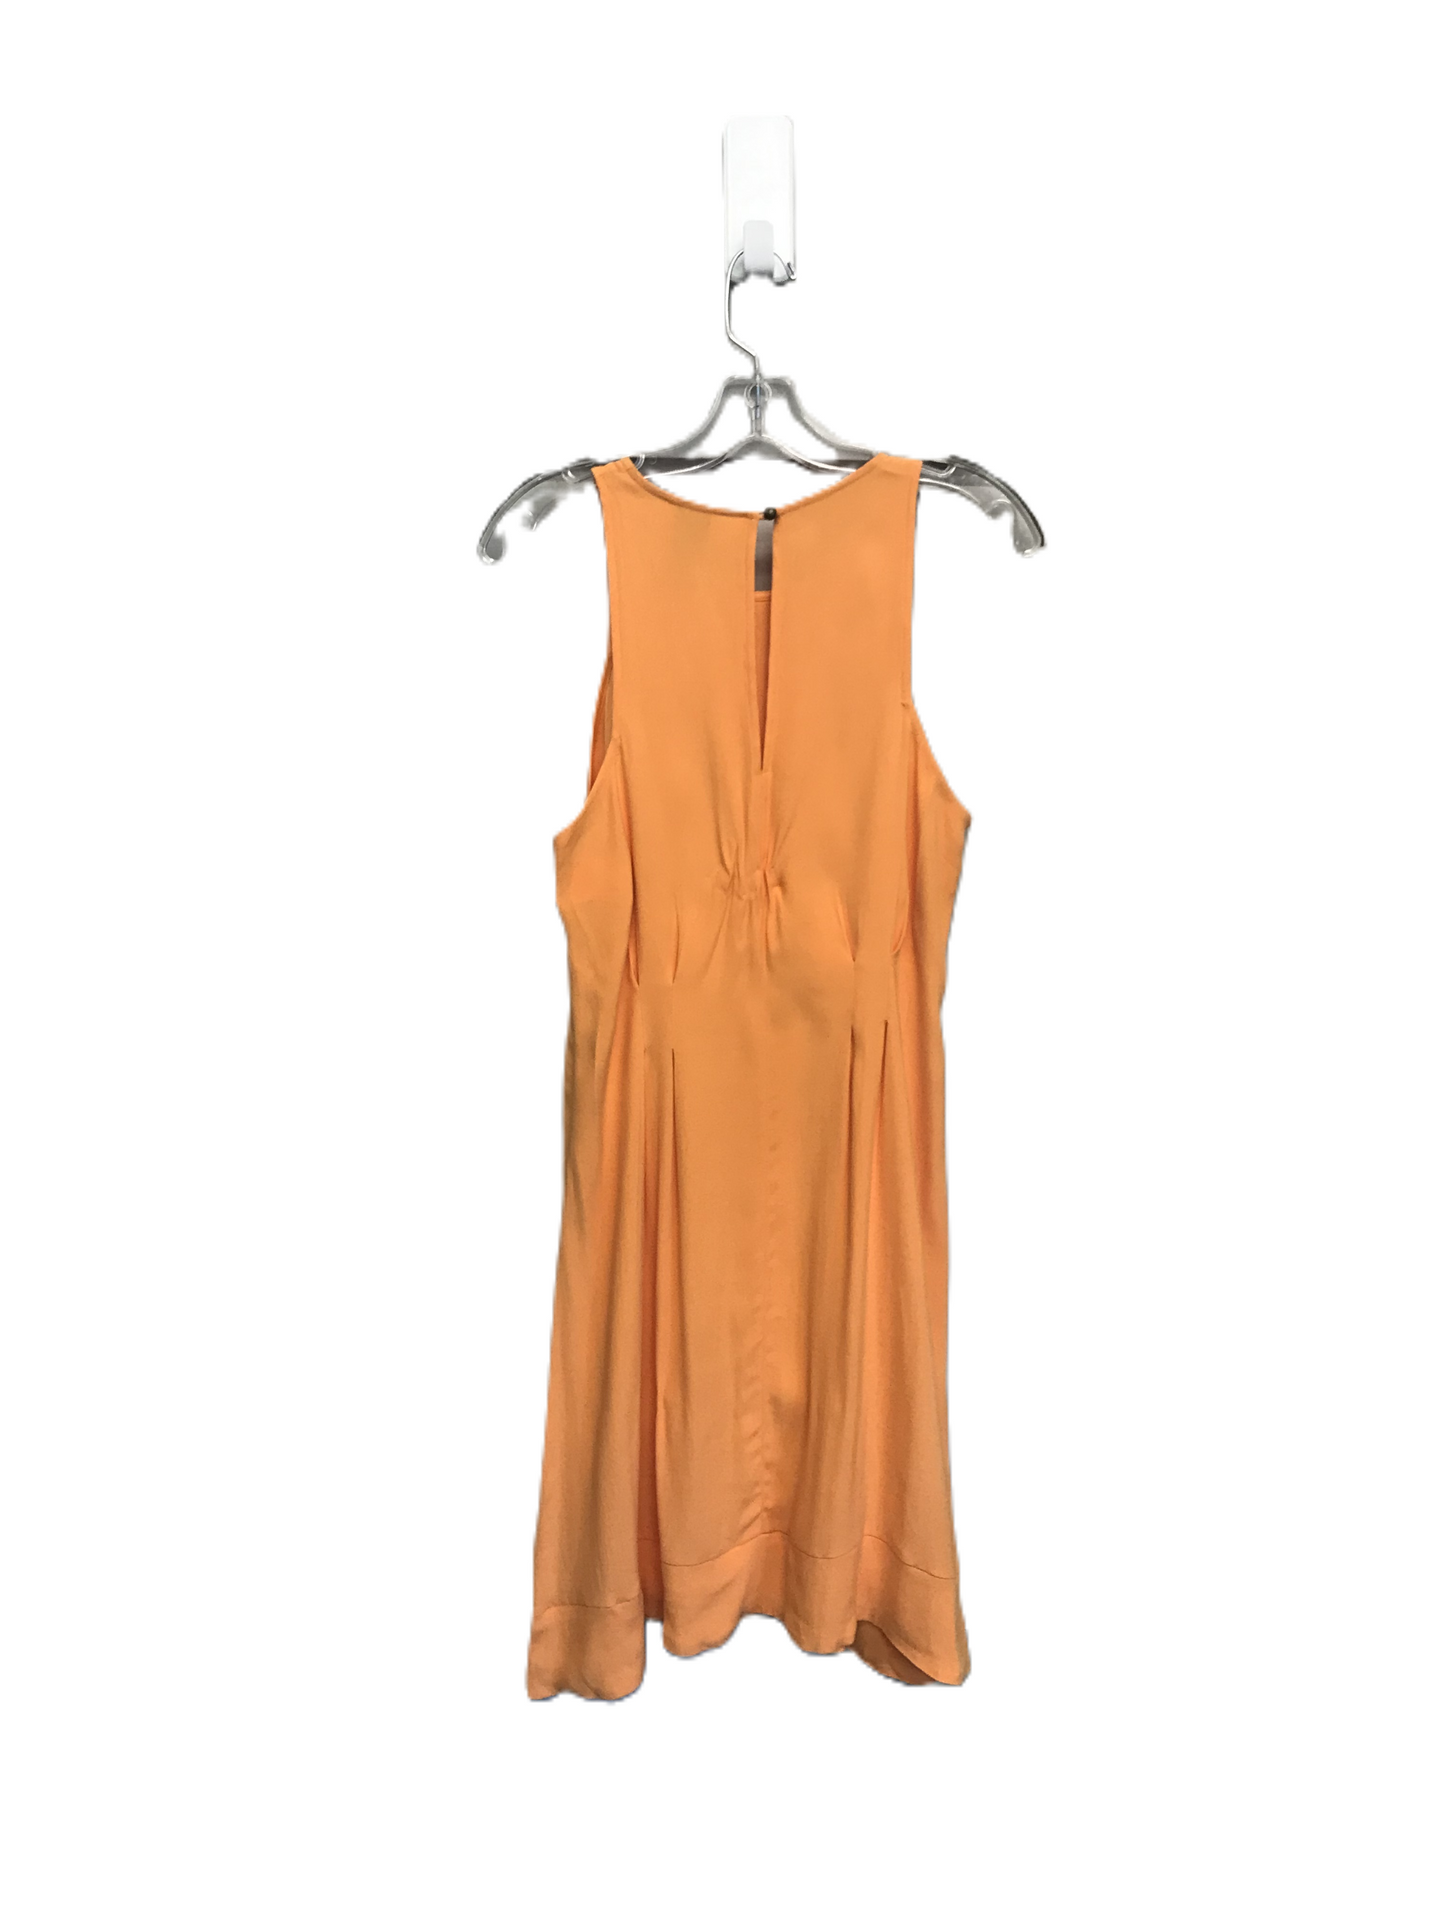 Orange Dress Casual Short By Hd In Paris, Size: M